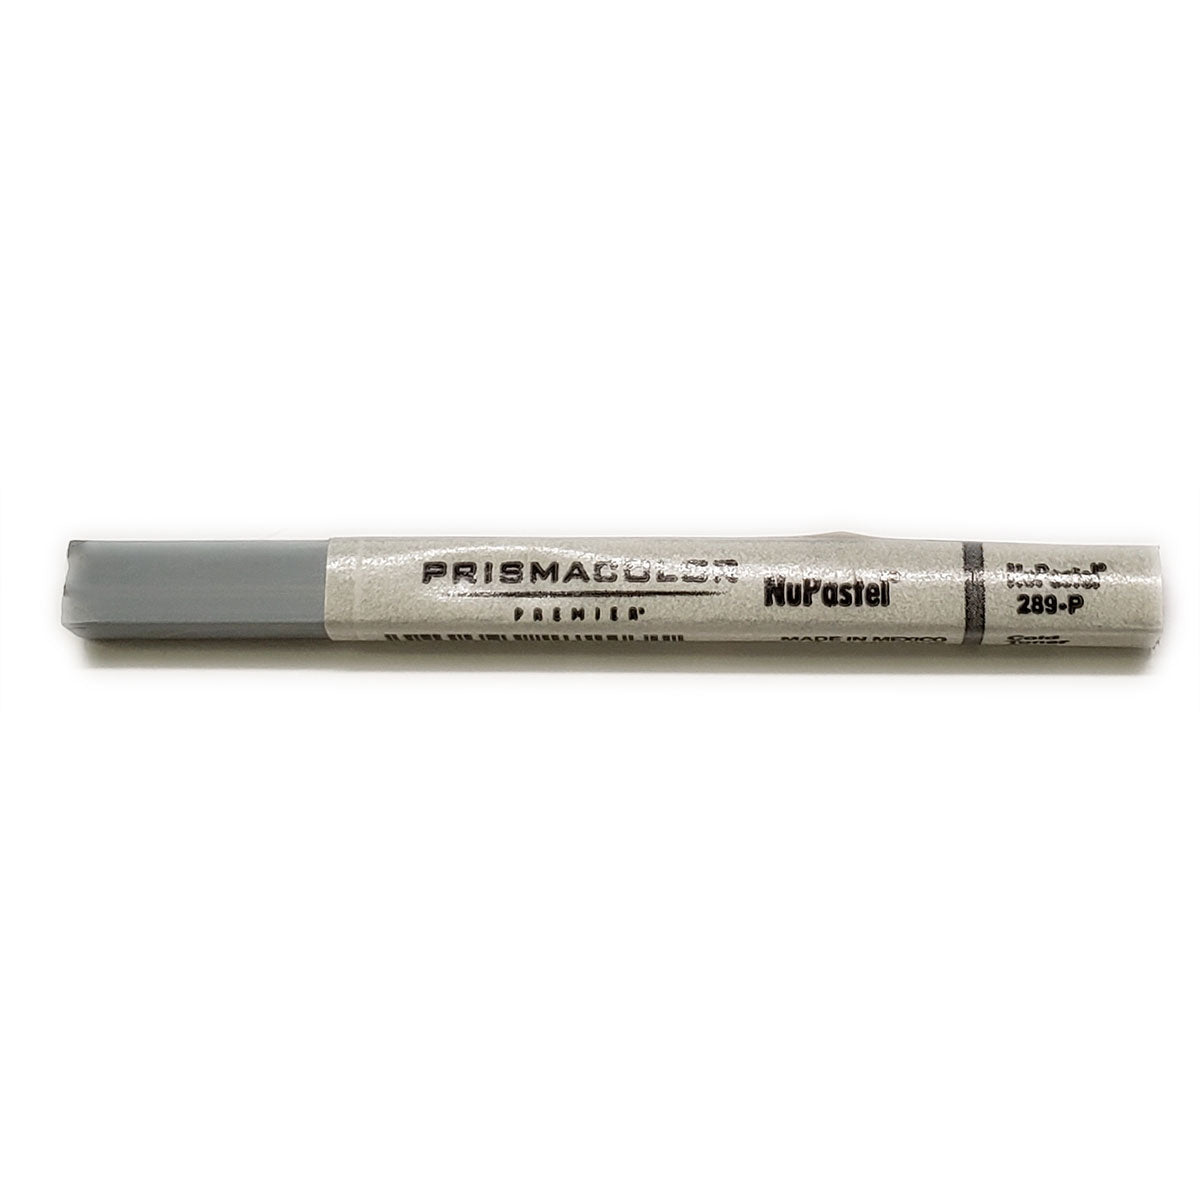 Prismacolor Verithin Aquamarine 737 1/2 Colored Pencils